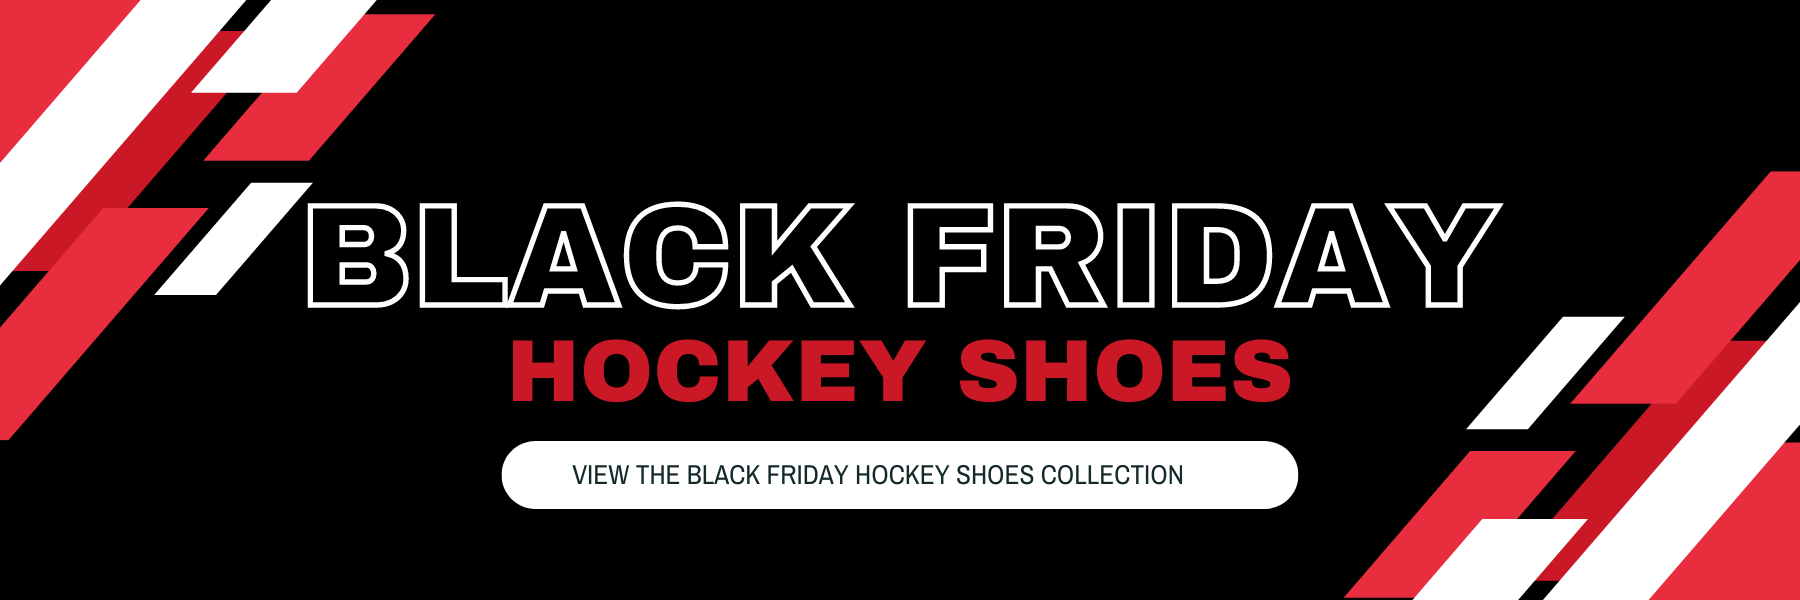 Black Friday Field Hockey Shoes Deals